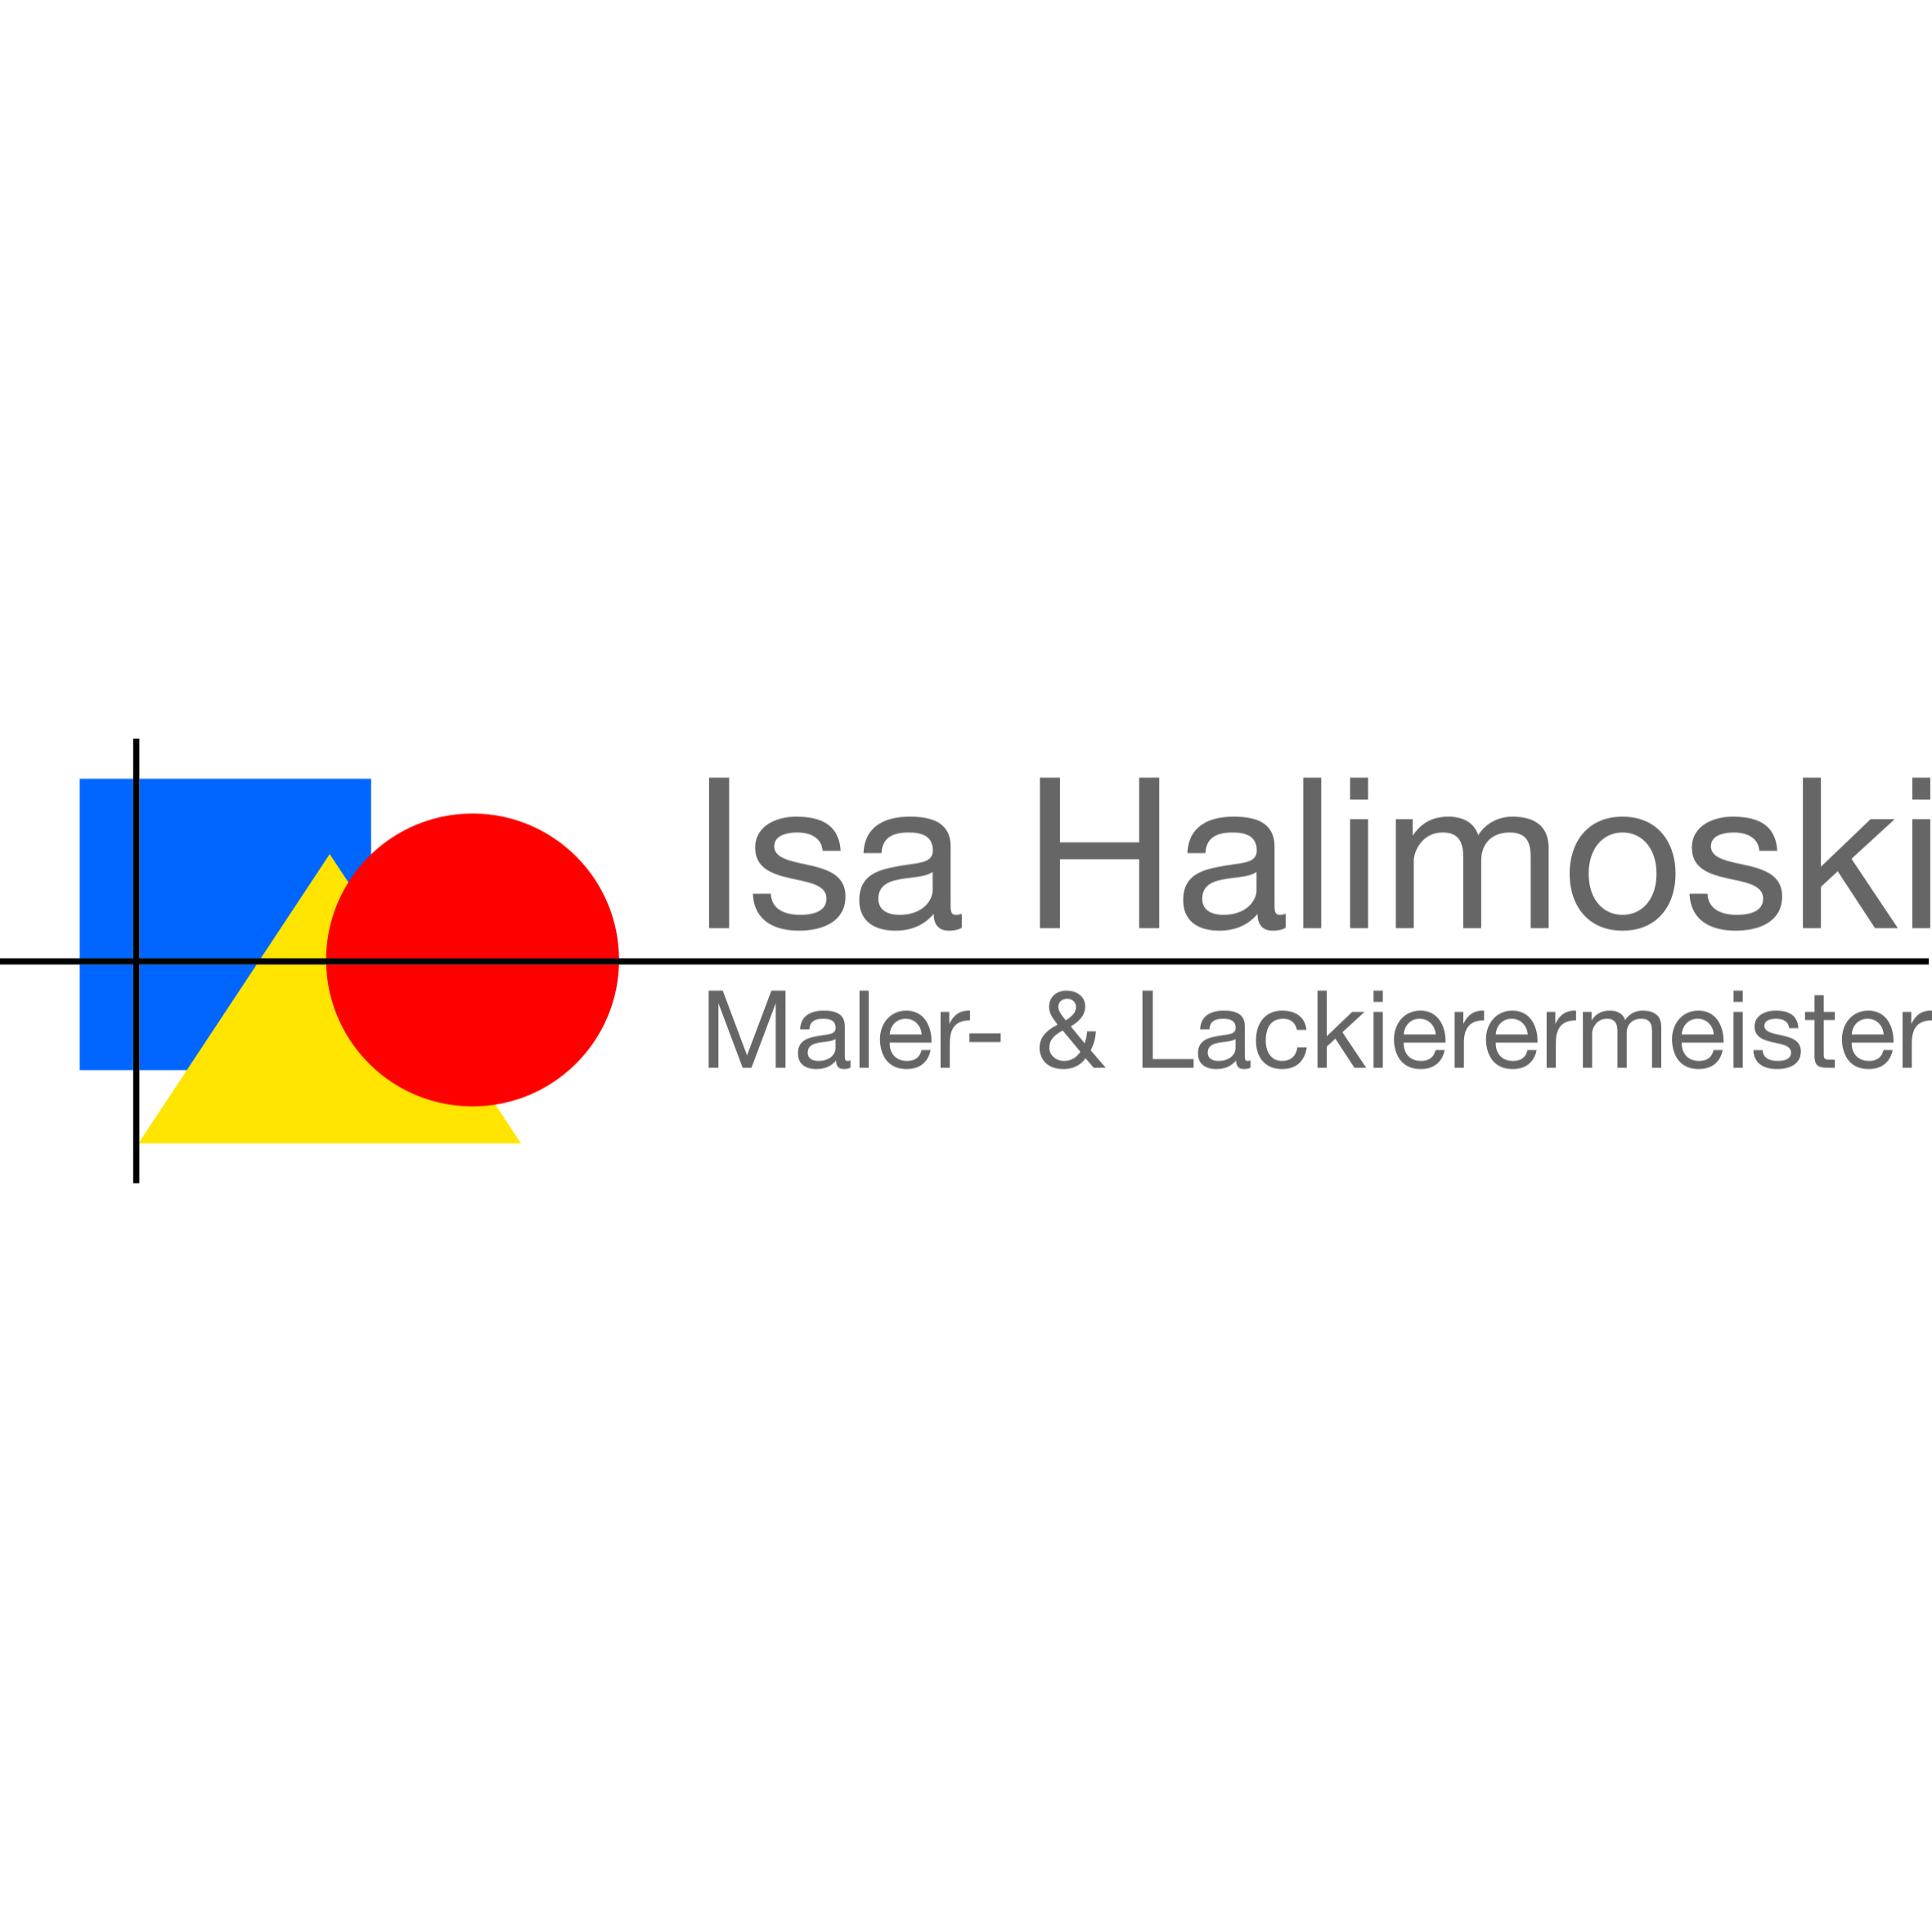 Malermeisterbetrieb Halimoski in Dortmund - Logo